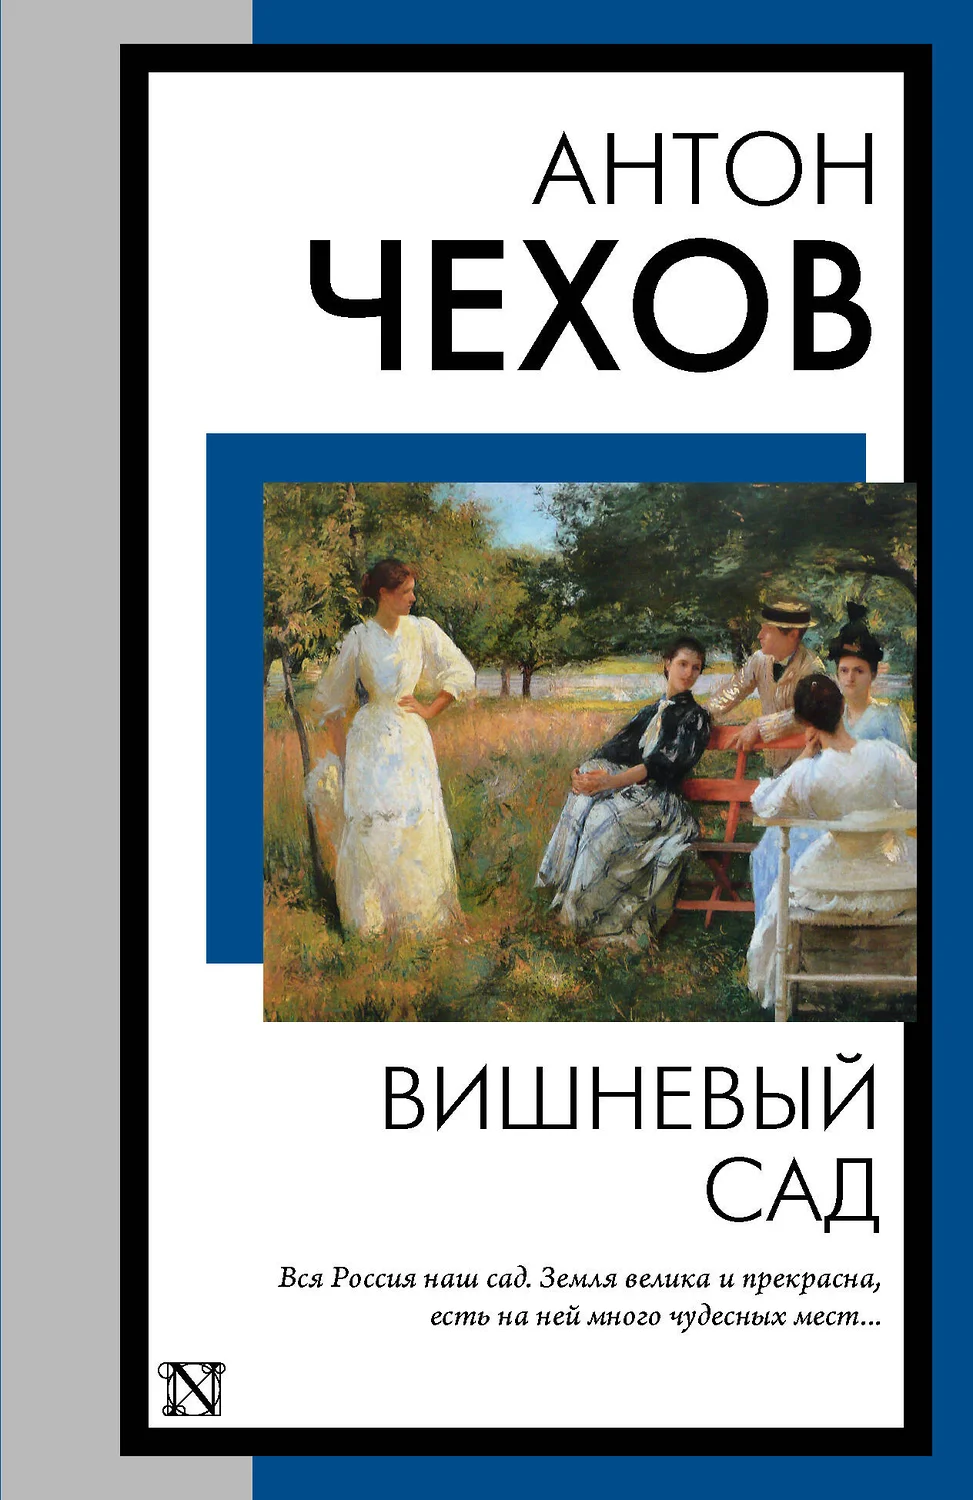 Вишневый сад Книга Чехов АП 12+